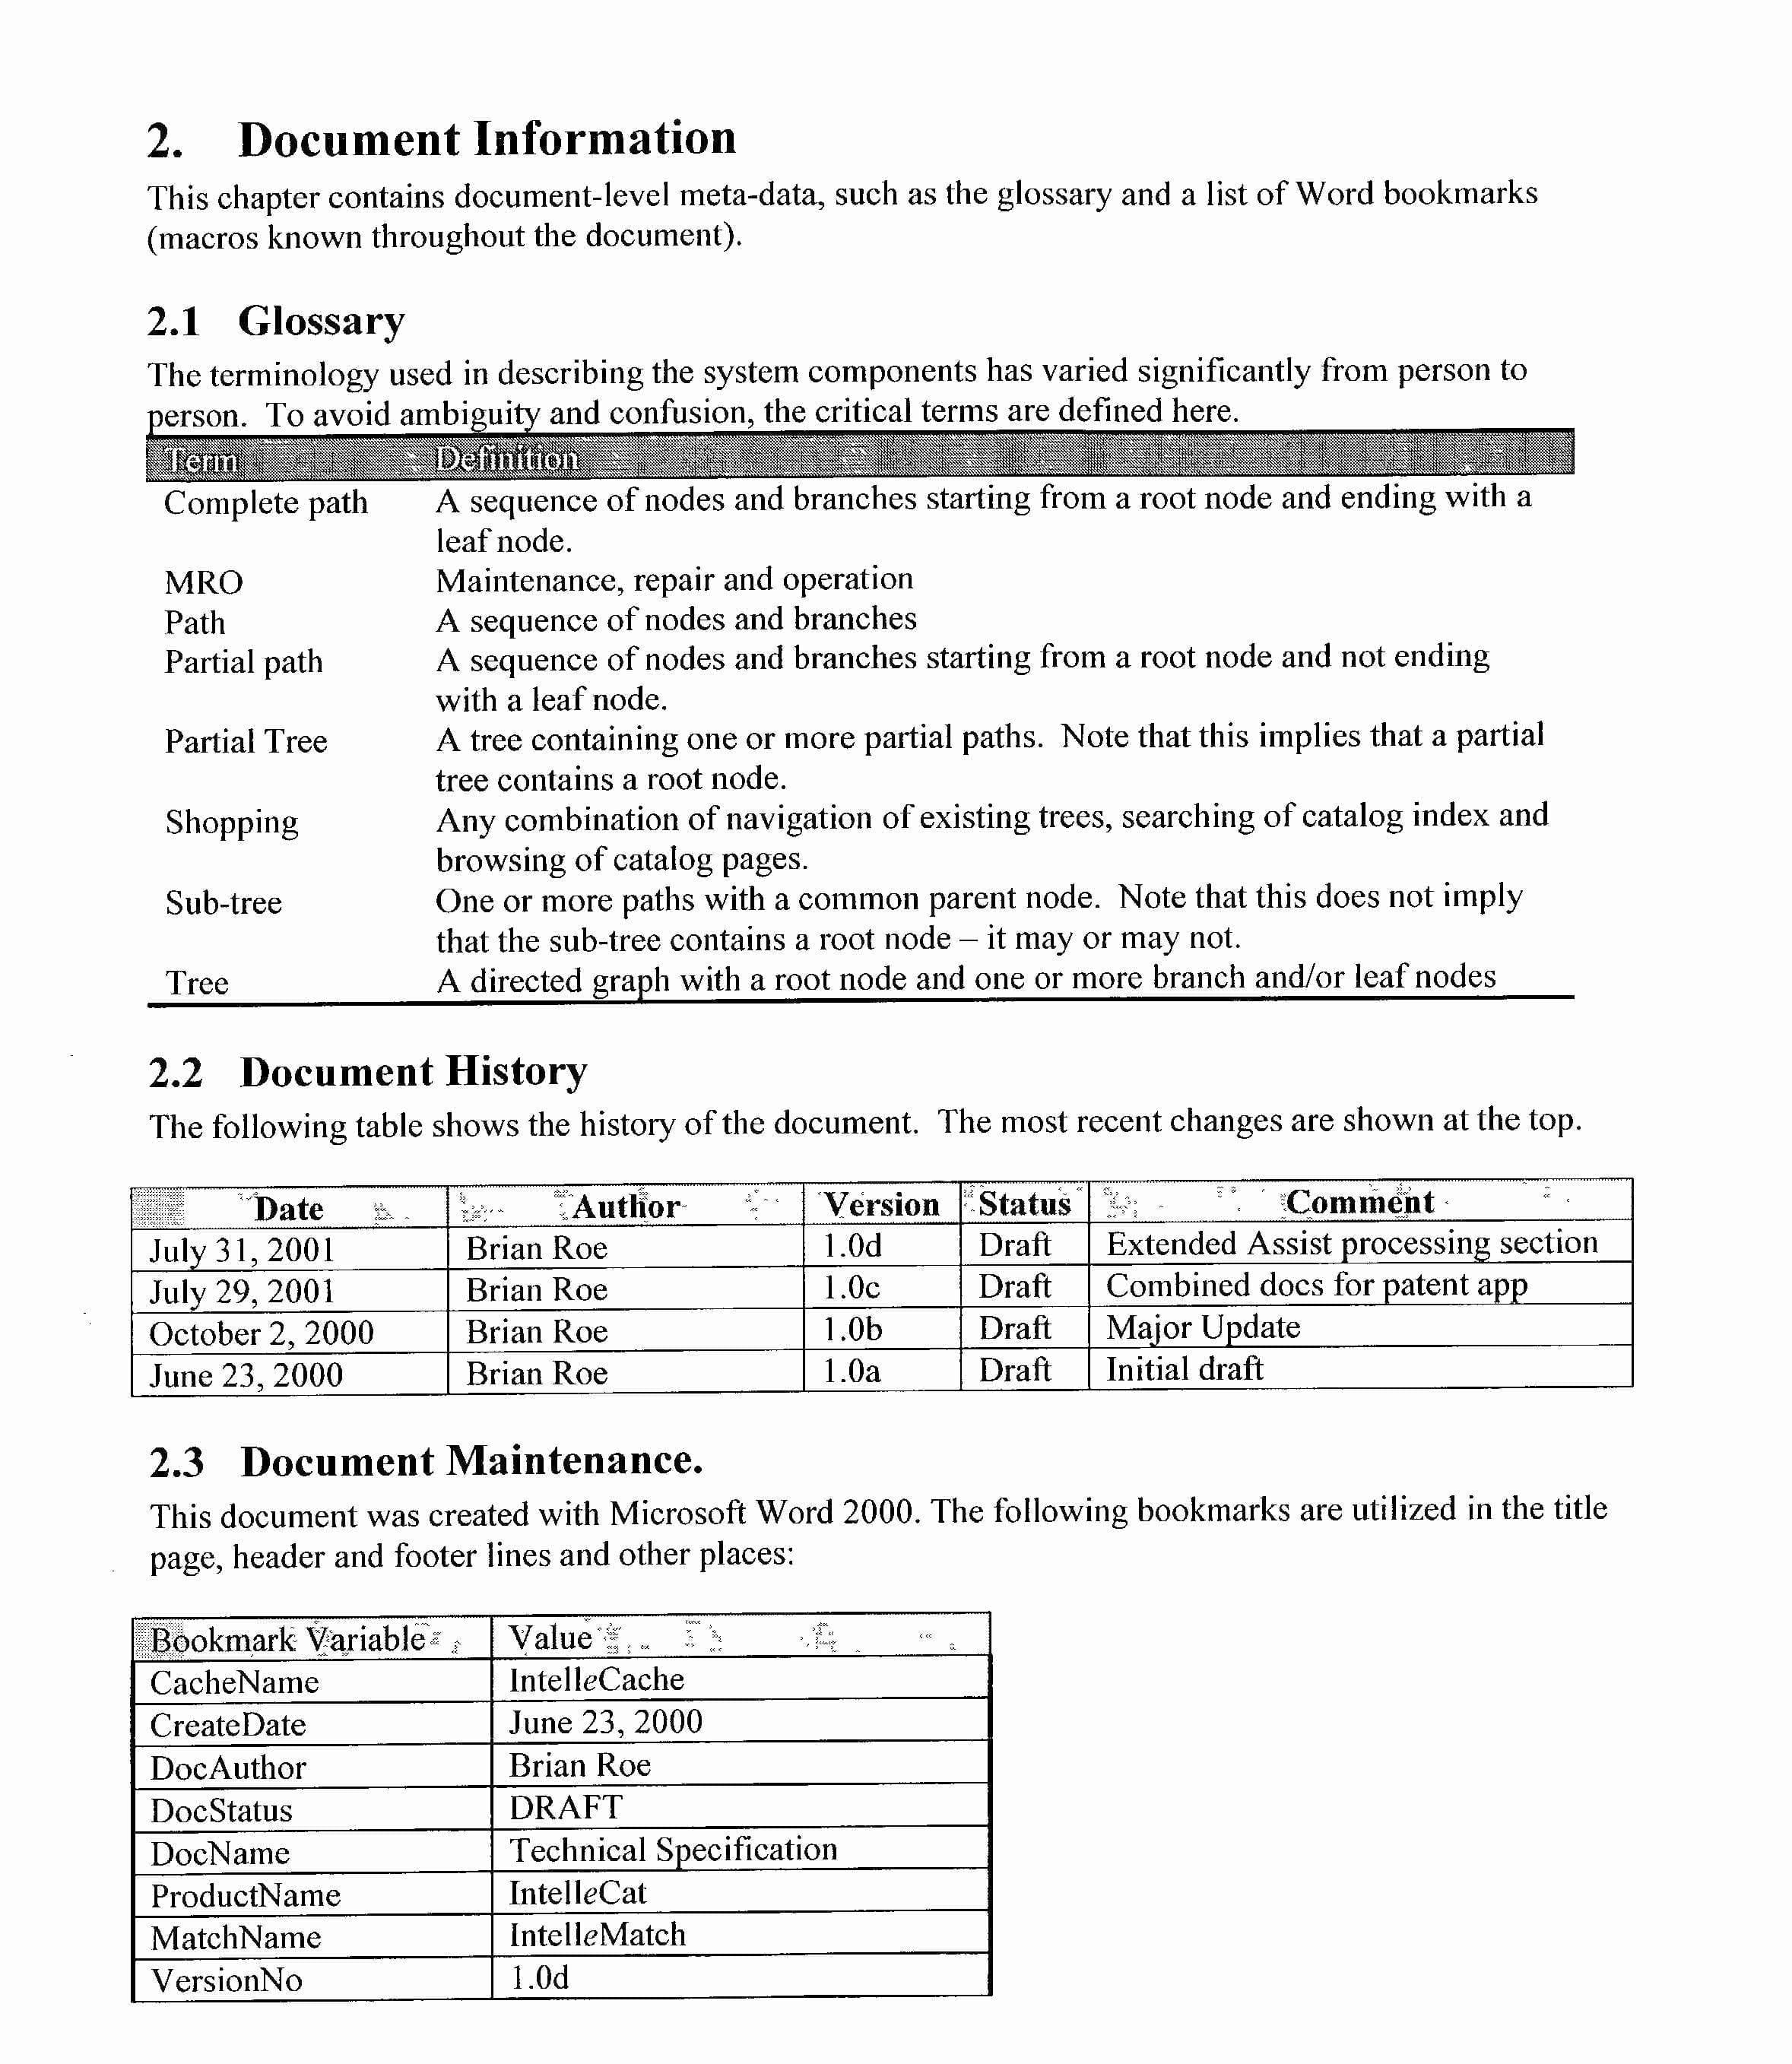 Checkbook Register Worksheet 1 Answers Archives  Bi Regarding Checkbook Register Worksheet 1 Answers